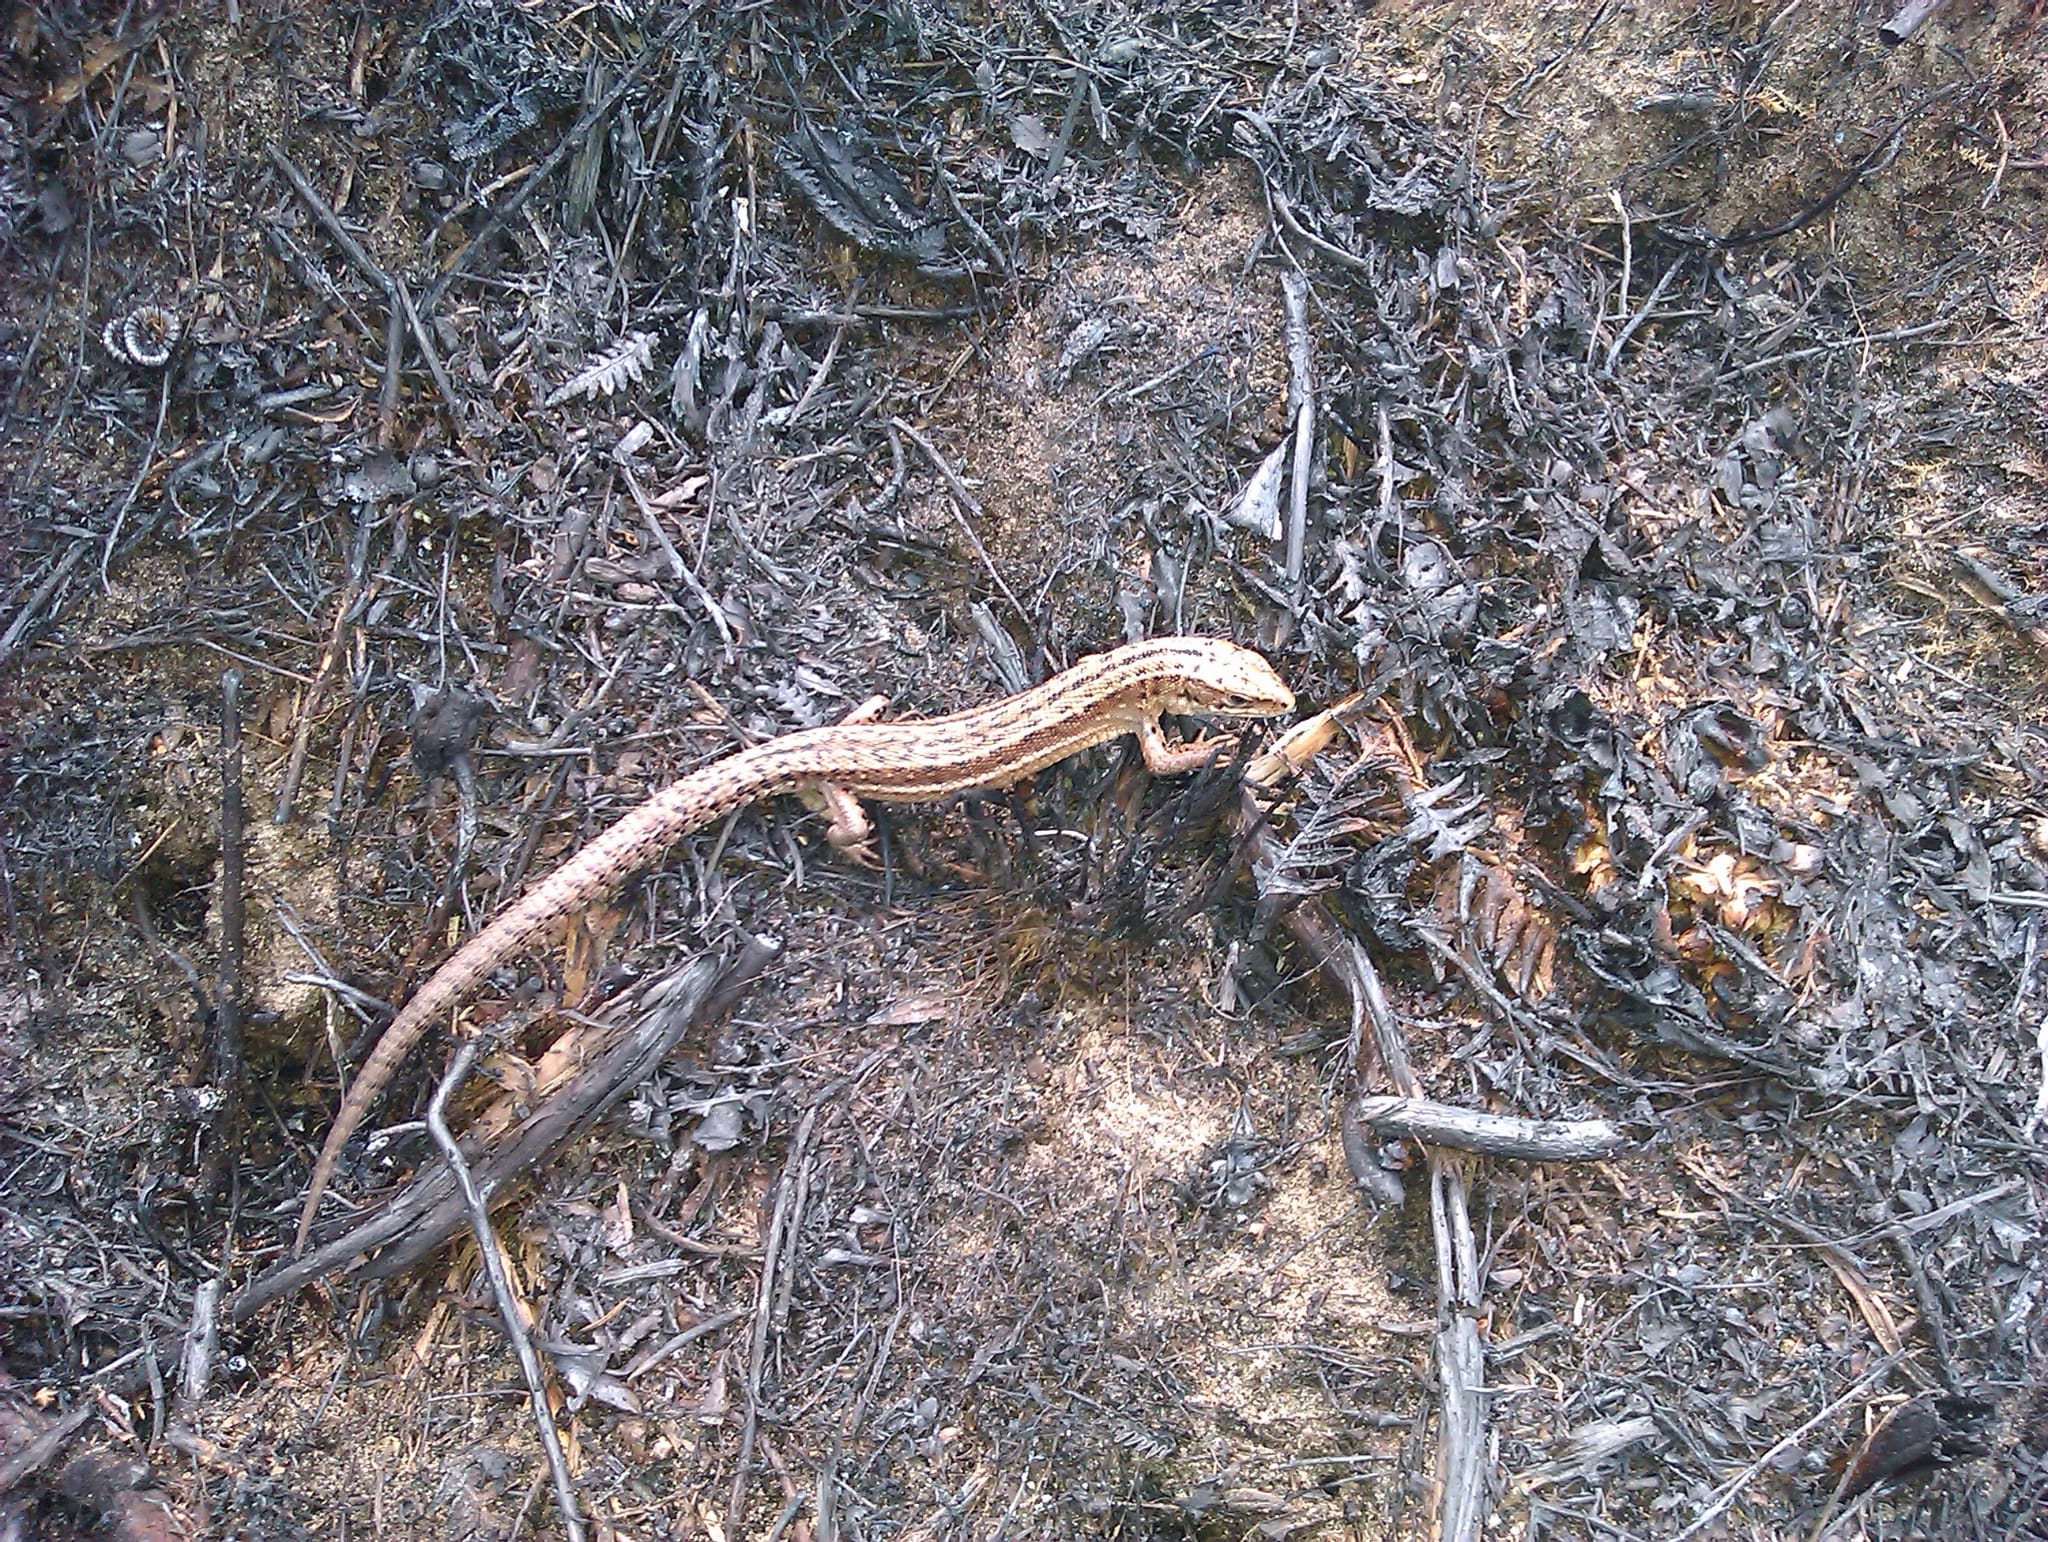 Common Lizard on charred ground